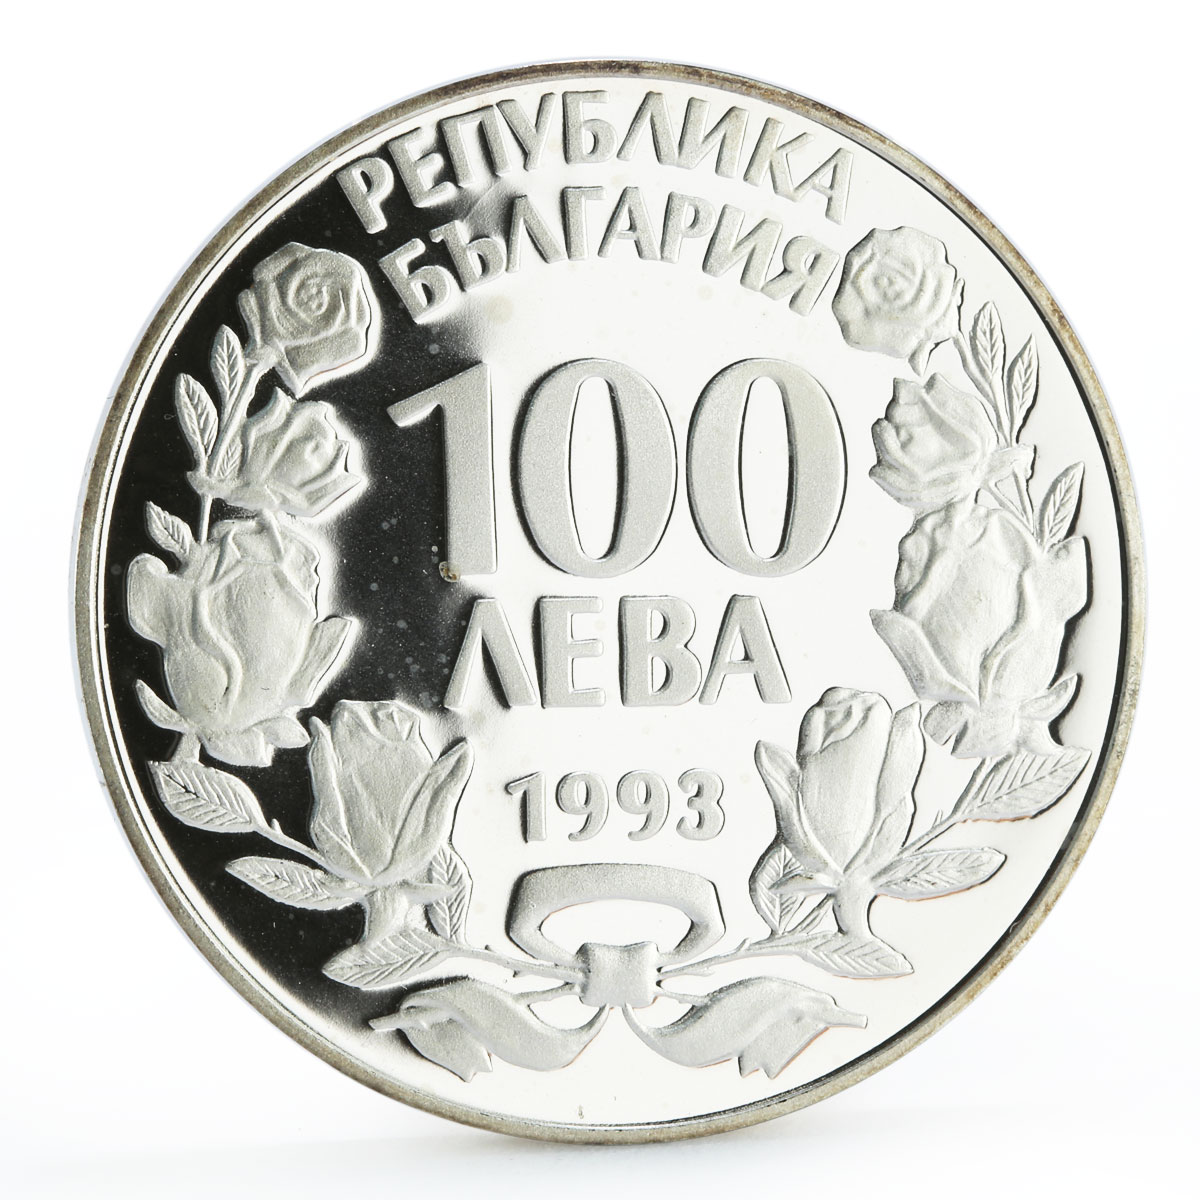 Bulgaria 100 leva Endangered Wildlife Wild Goat Fauna proof silver coin 1993